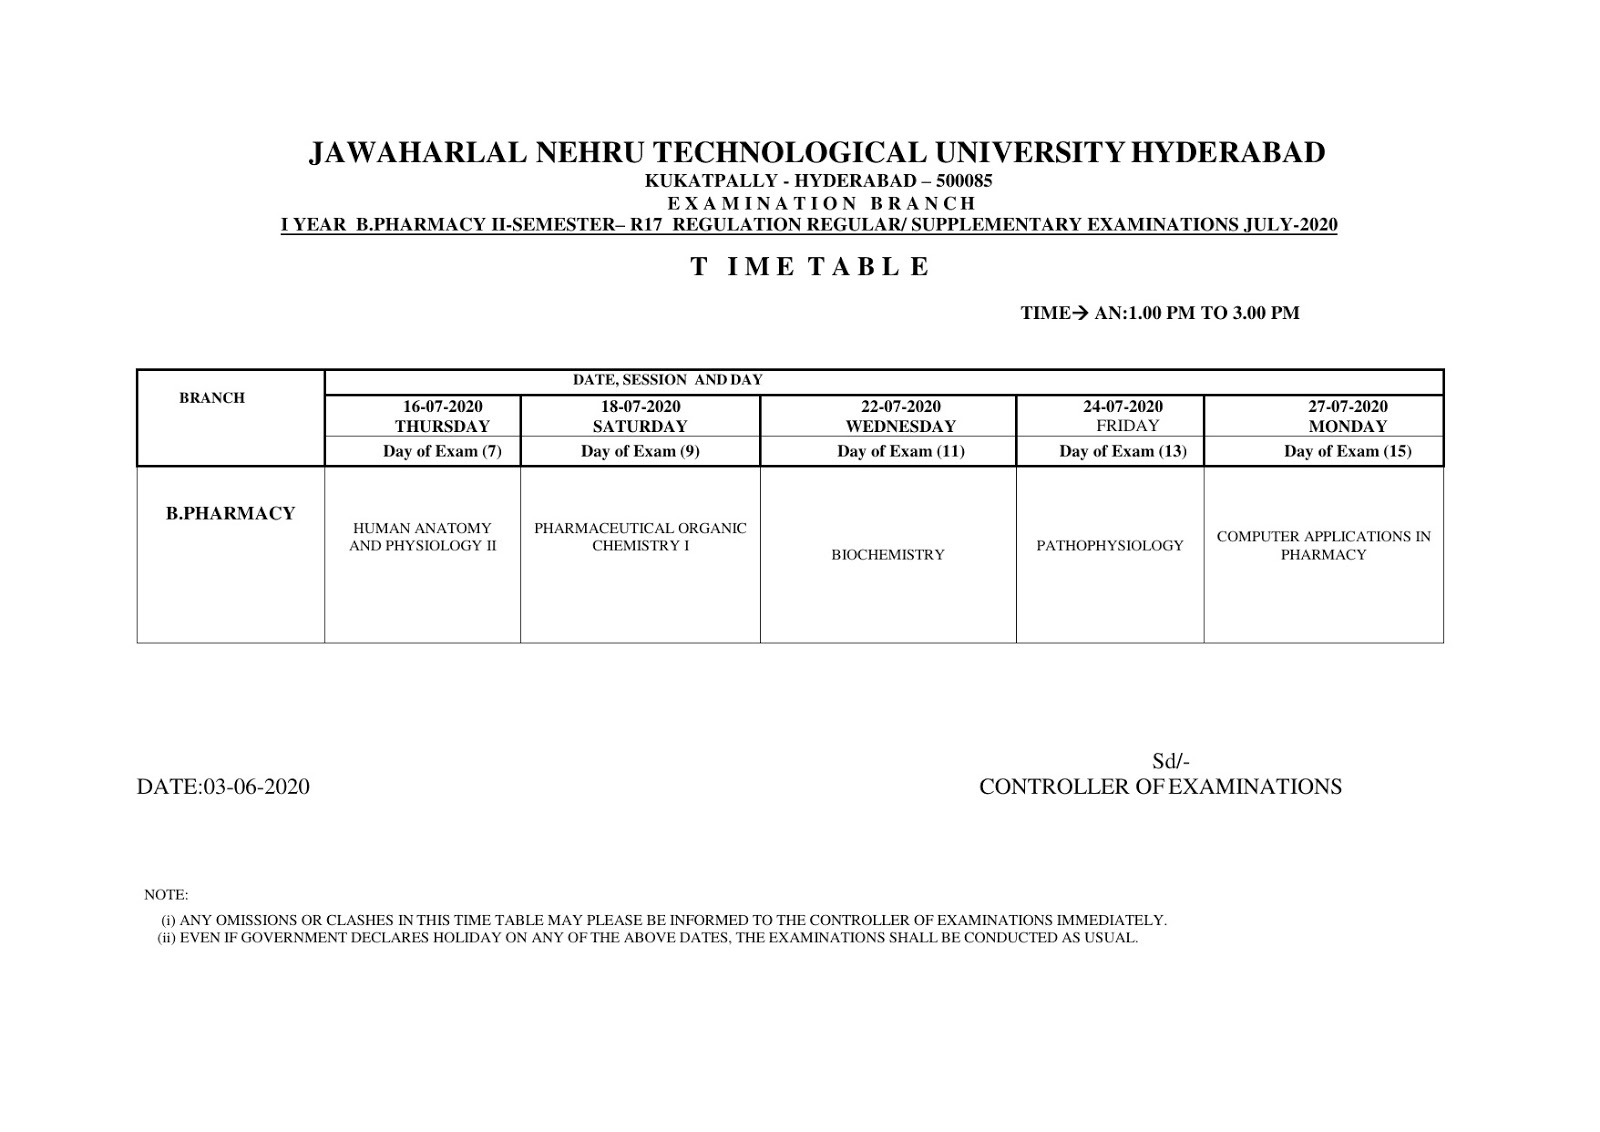 jntu hyderabad b.pharm 1st year 2nd sem r-17 reg & supply july 2020 time table